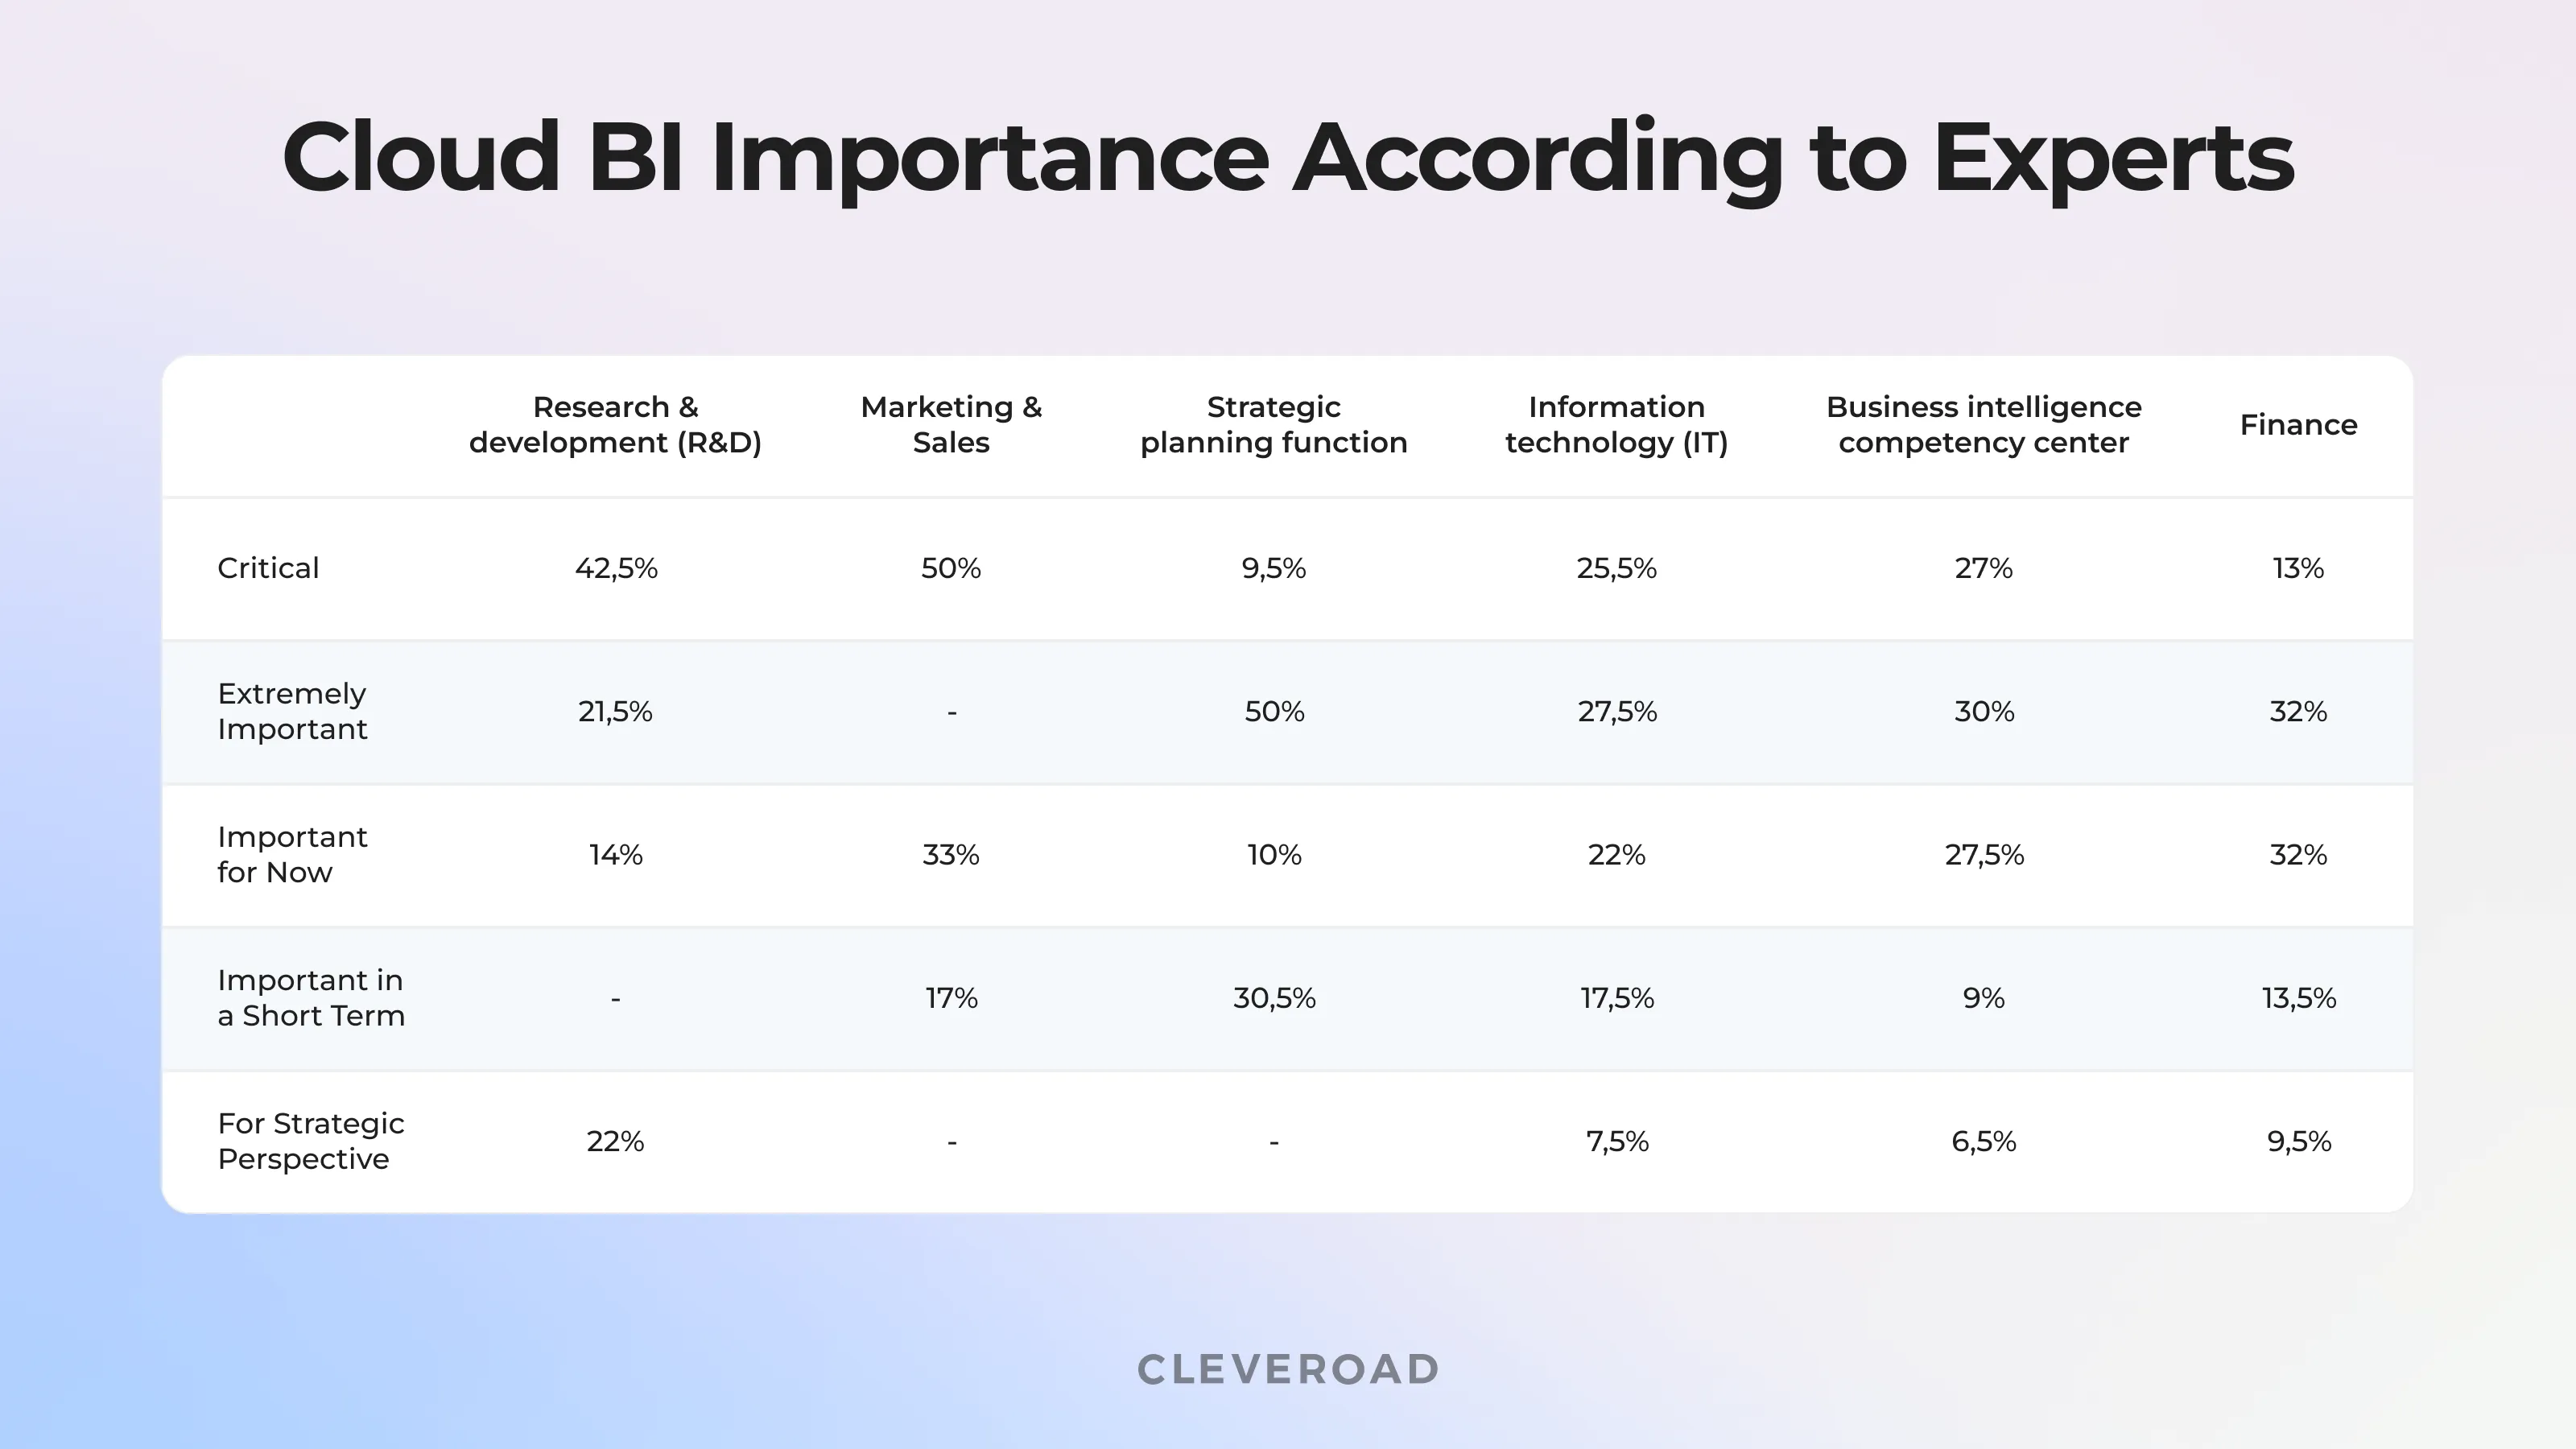 Cloud BI Importance According to Expert Surveys